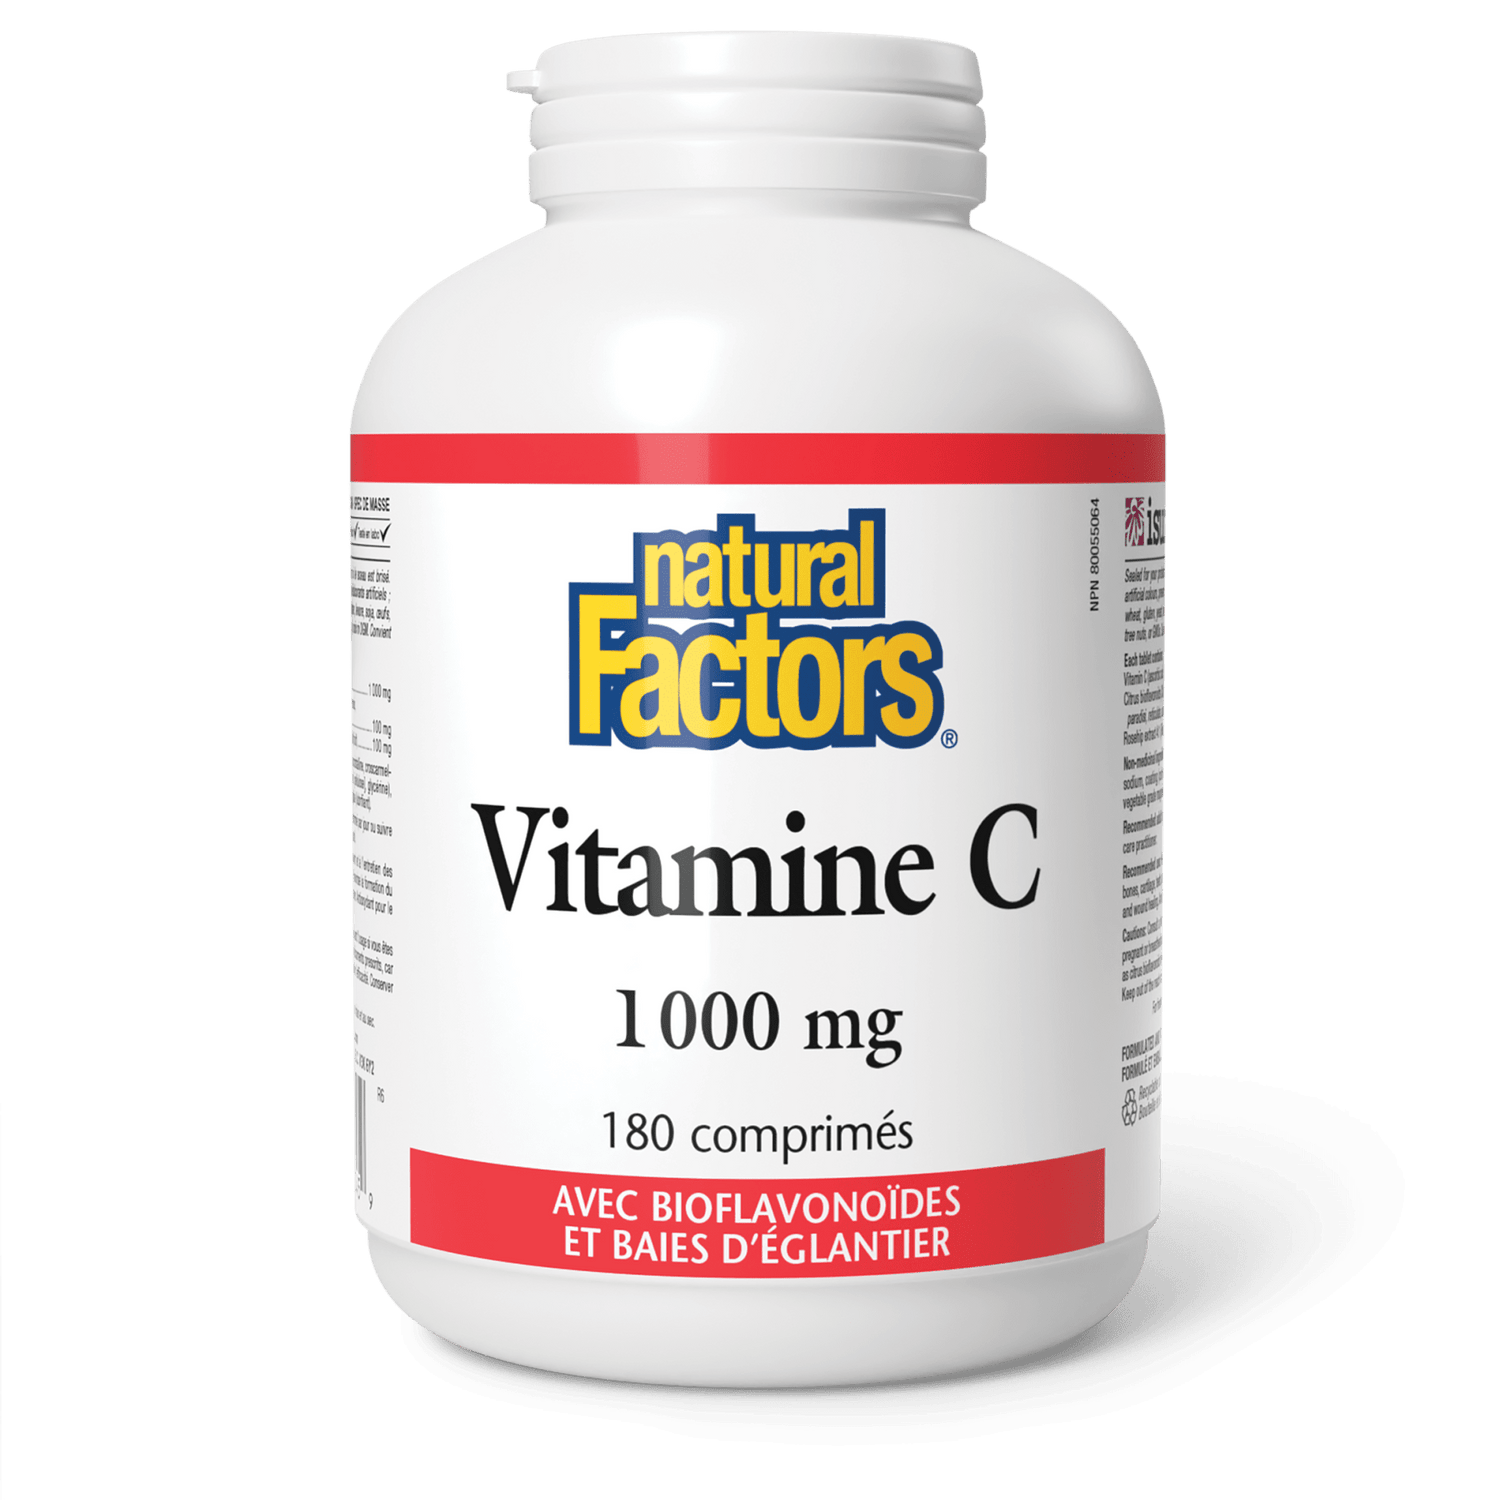 Vitamine C 1 000 mg, Natural Factors|v|image|1345